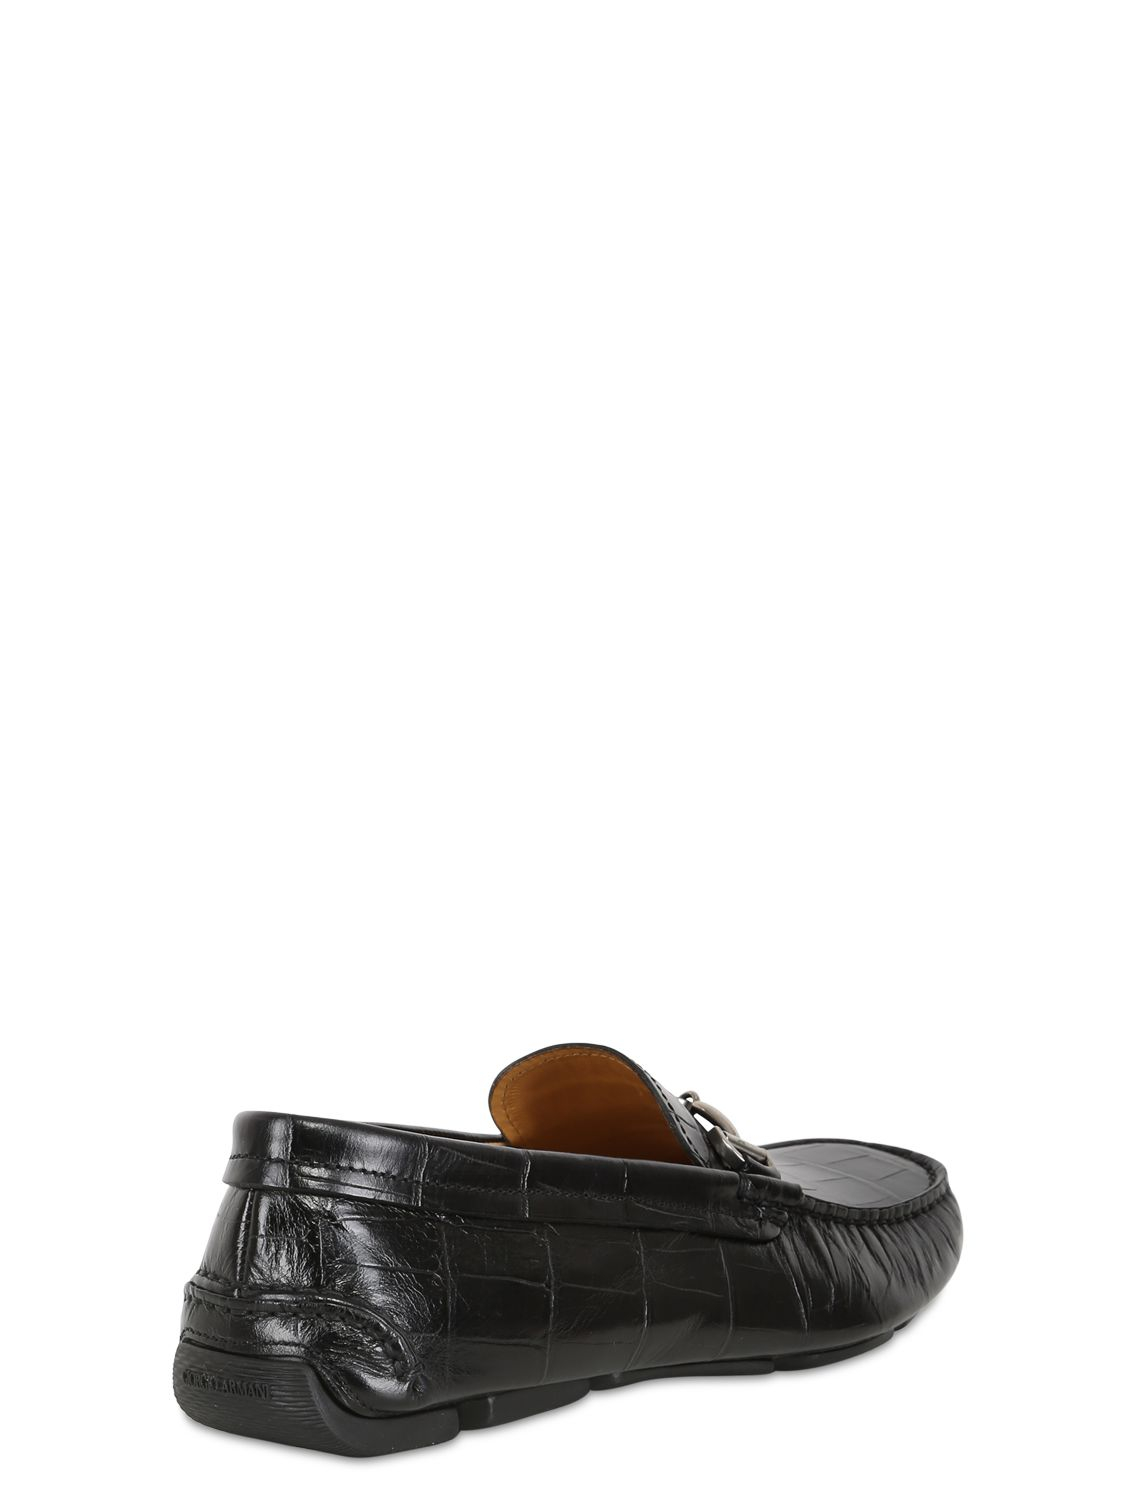 Lyst - Giorgio Armani Mock Croc Leather Horse Bite Loafers in Black for Men